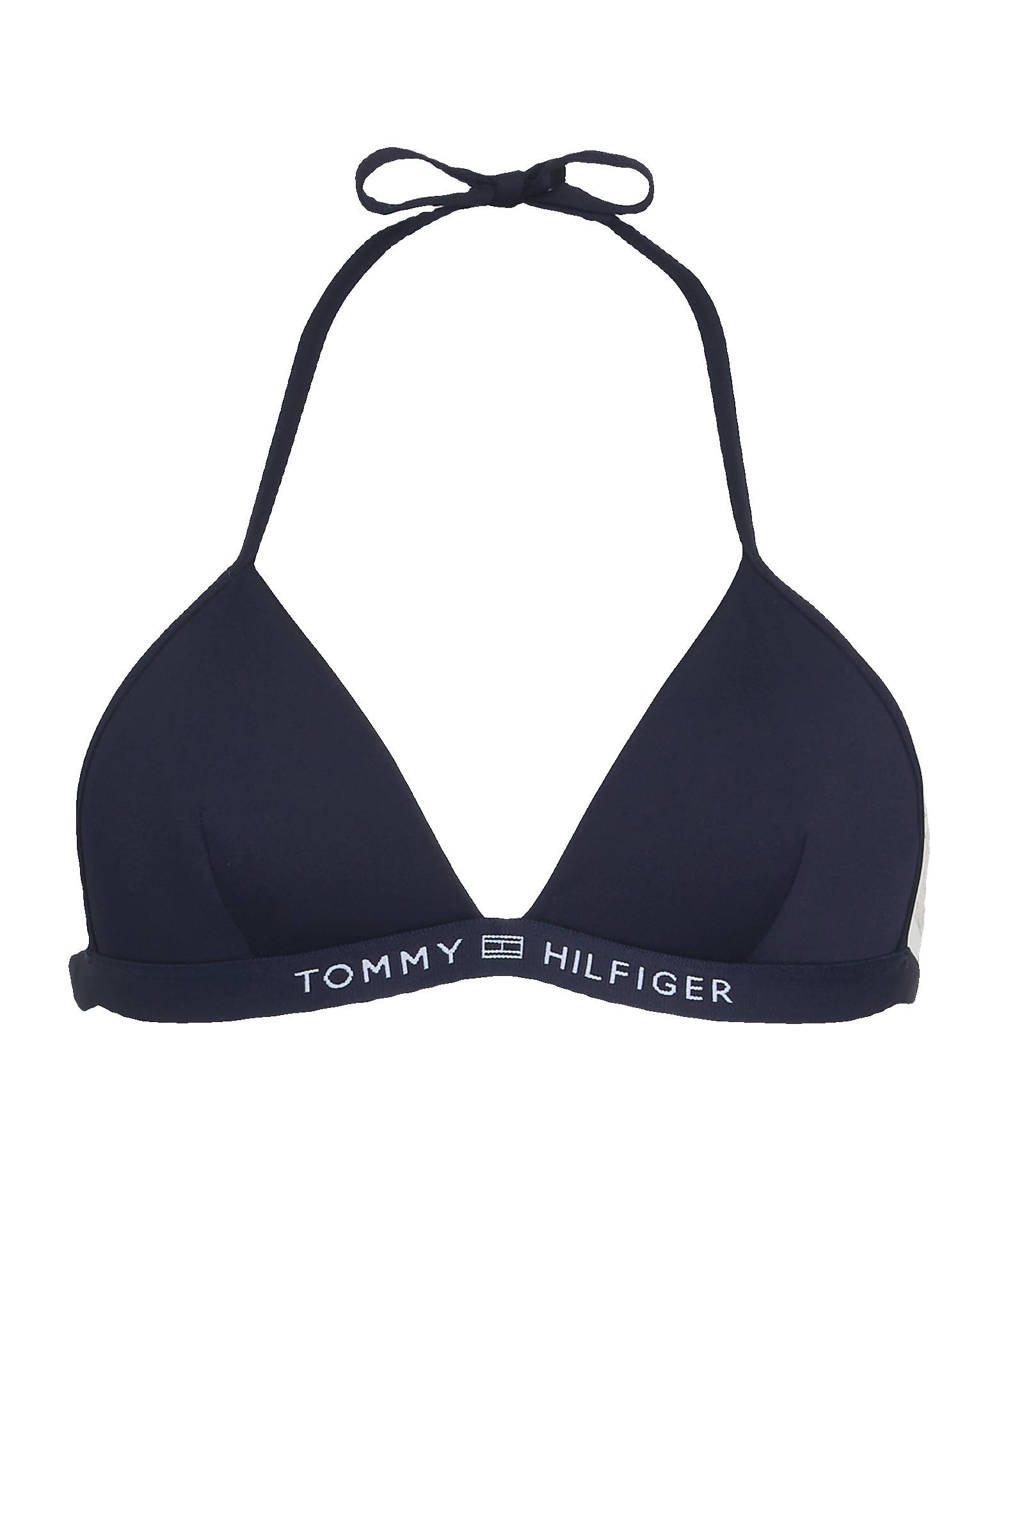 Tommy Hilfiger triangel bikinitop donkerblauw, Donkerblauw